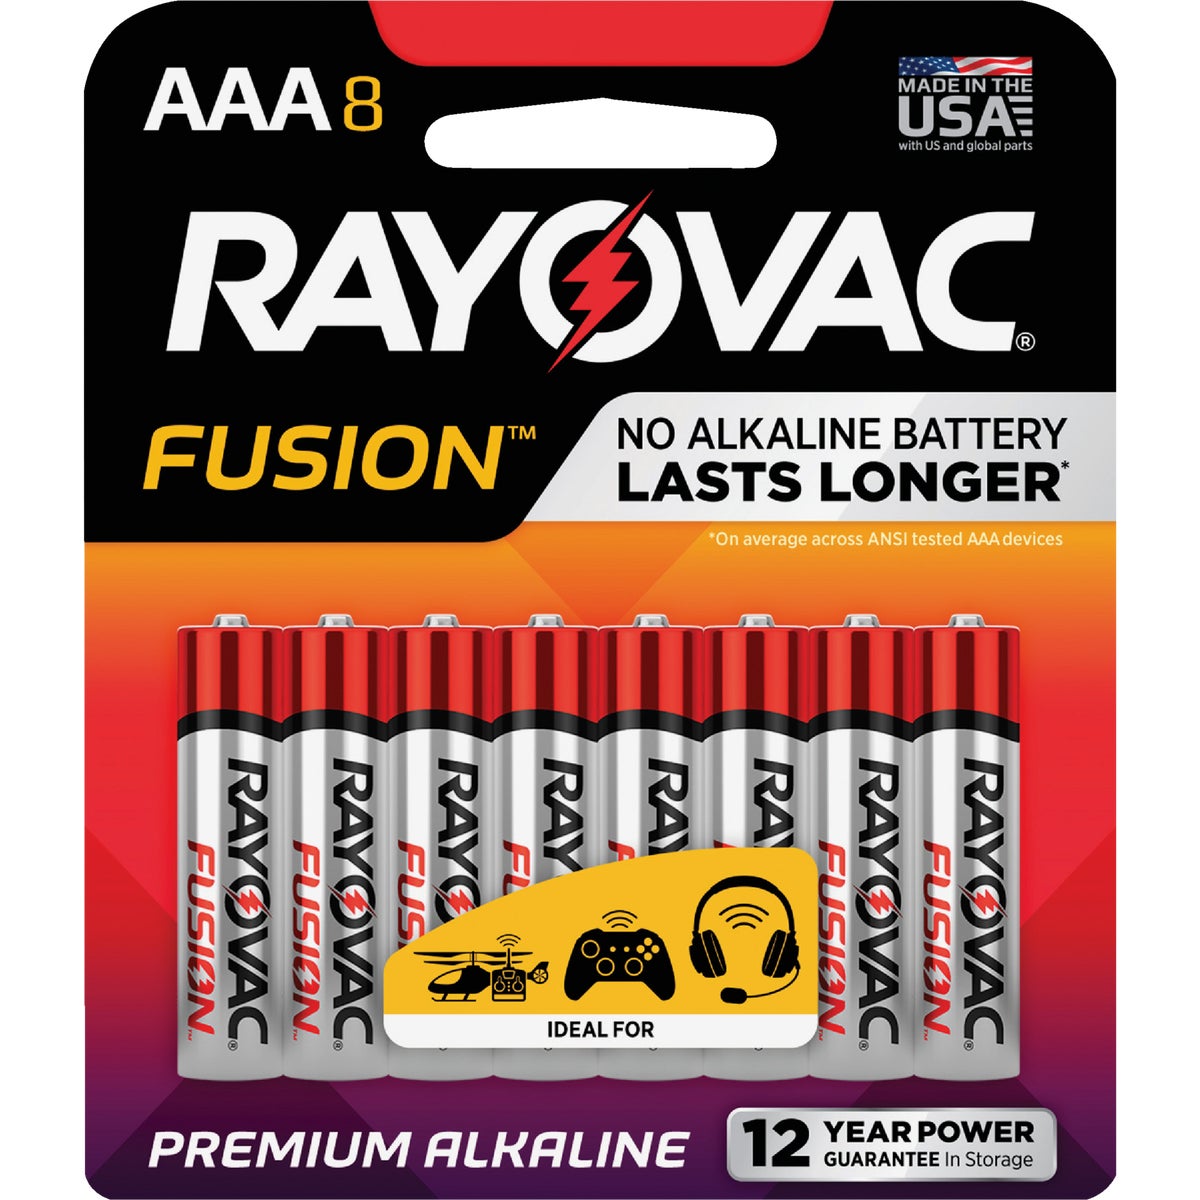 Rayovac Fusion AAA Alkaline Battery (8-Pack)